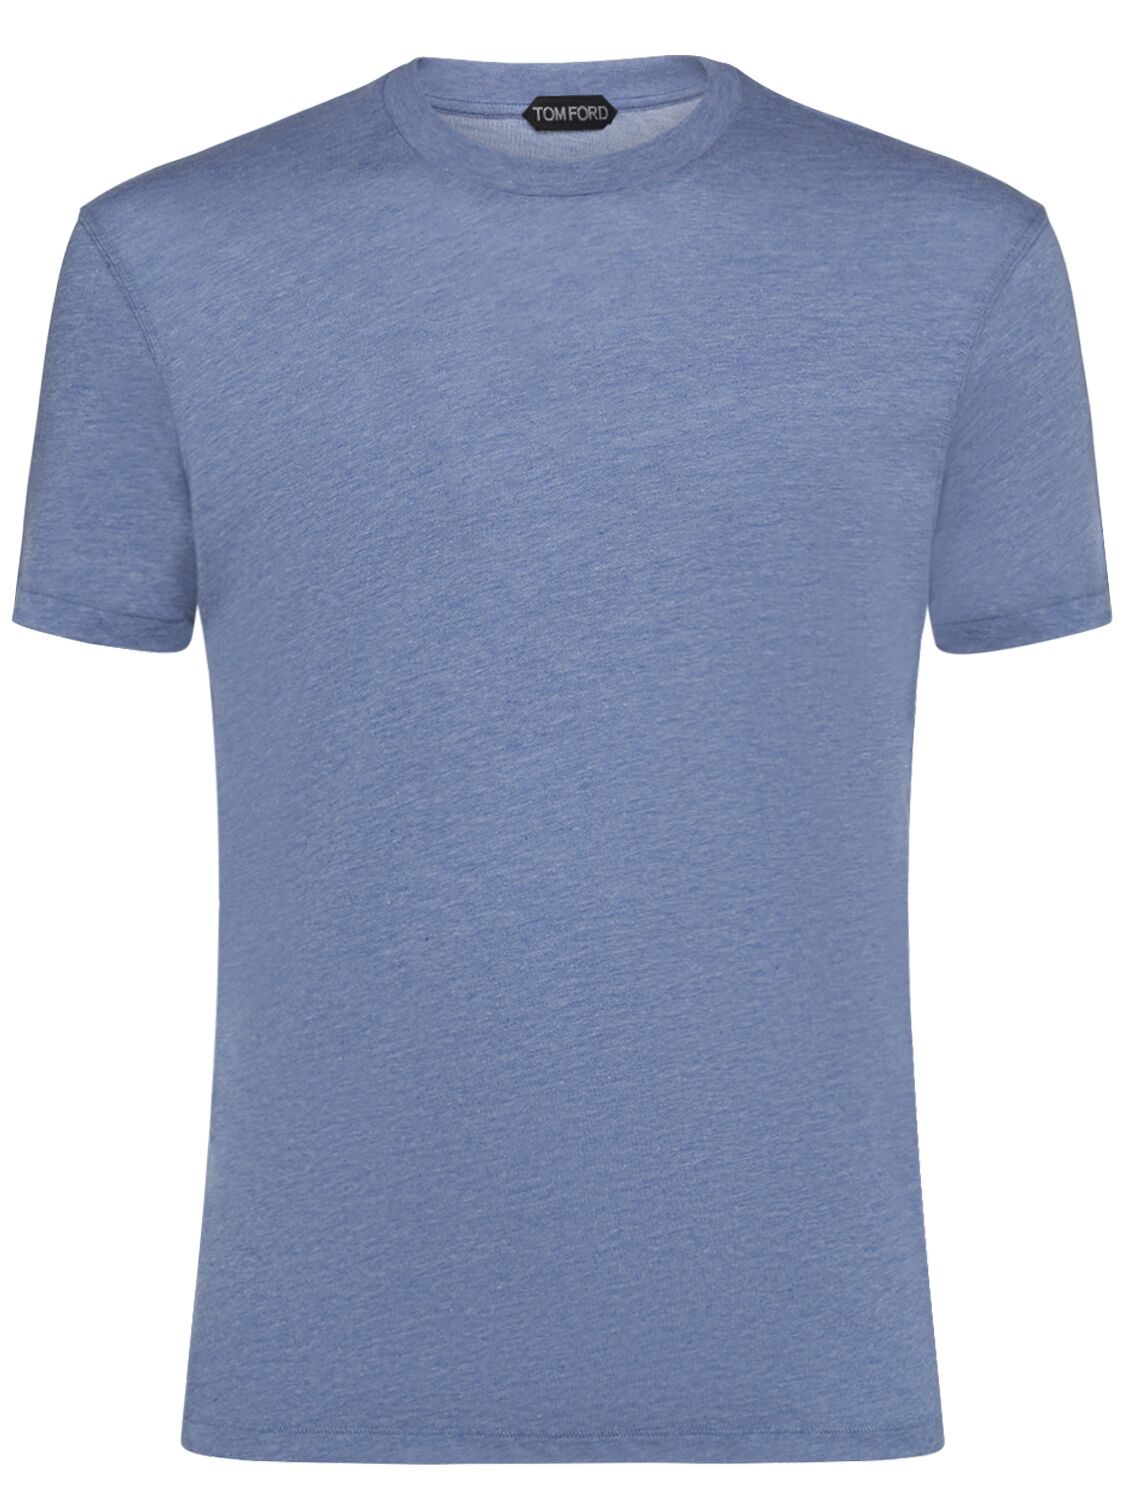 Tom Ford Cotton Blend Crewneck T-shirt In Denim